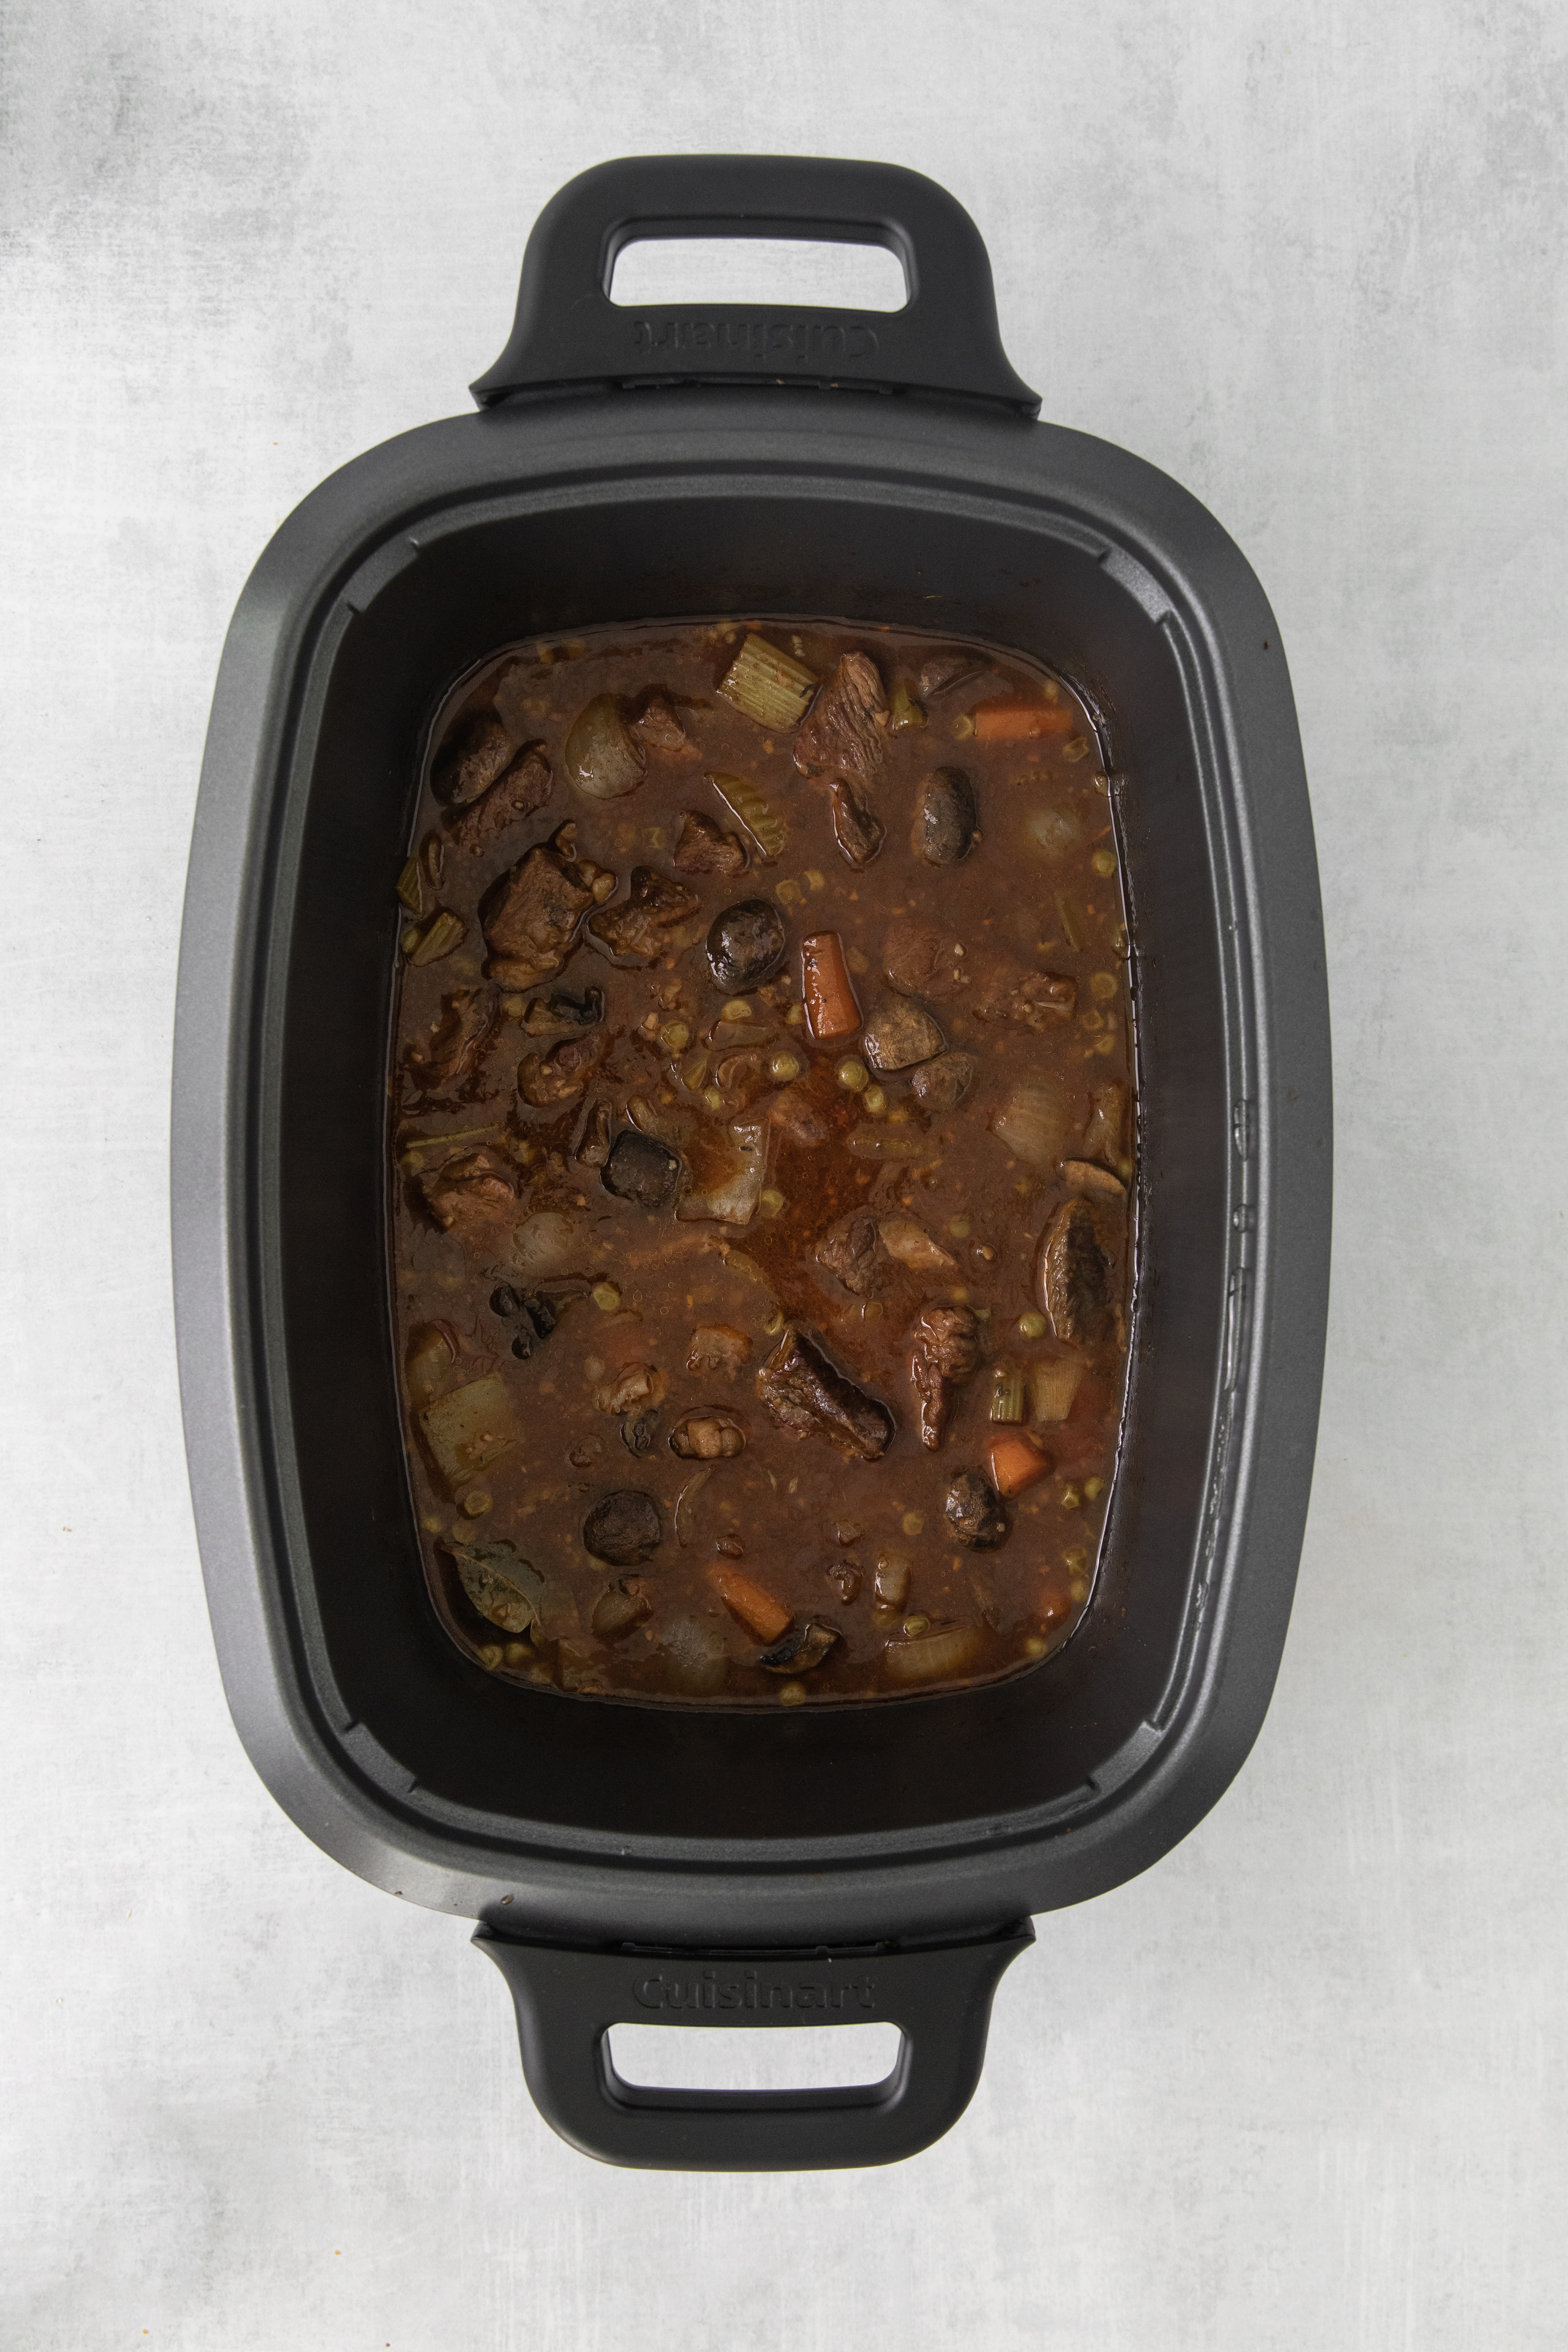 beef stew in a crockpot.